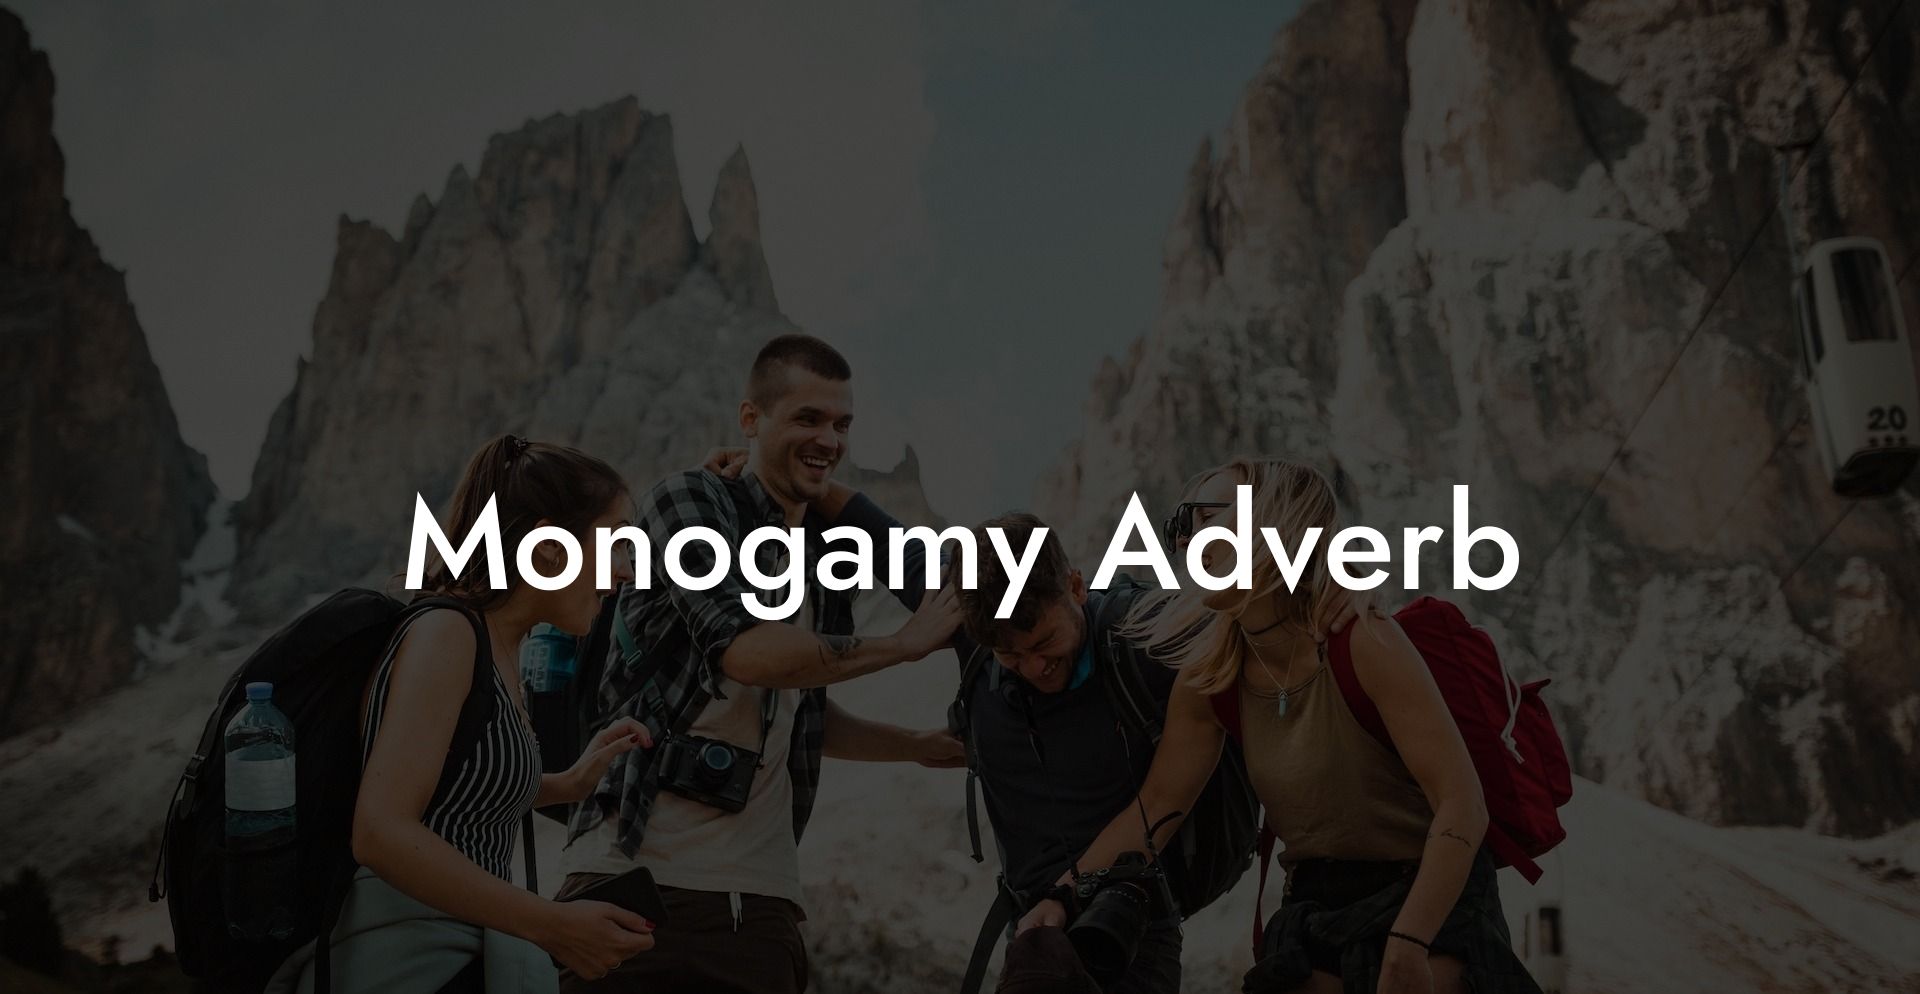 Monogamy Adverb